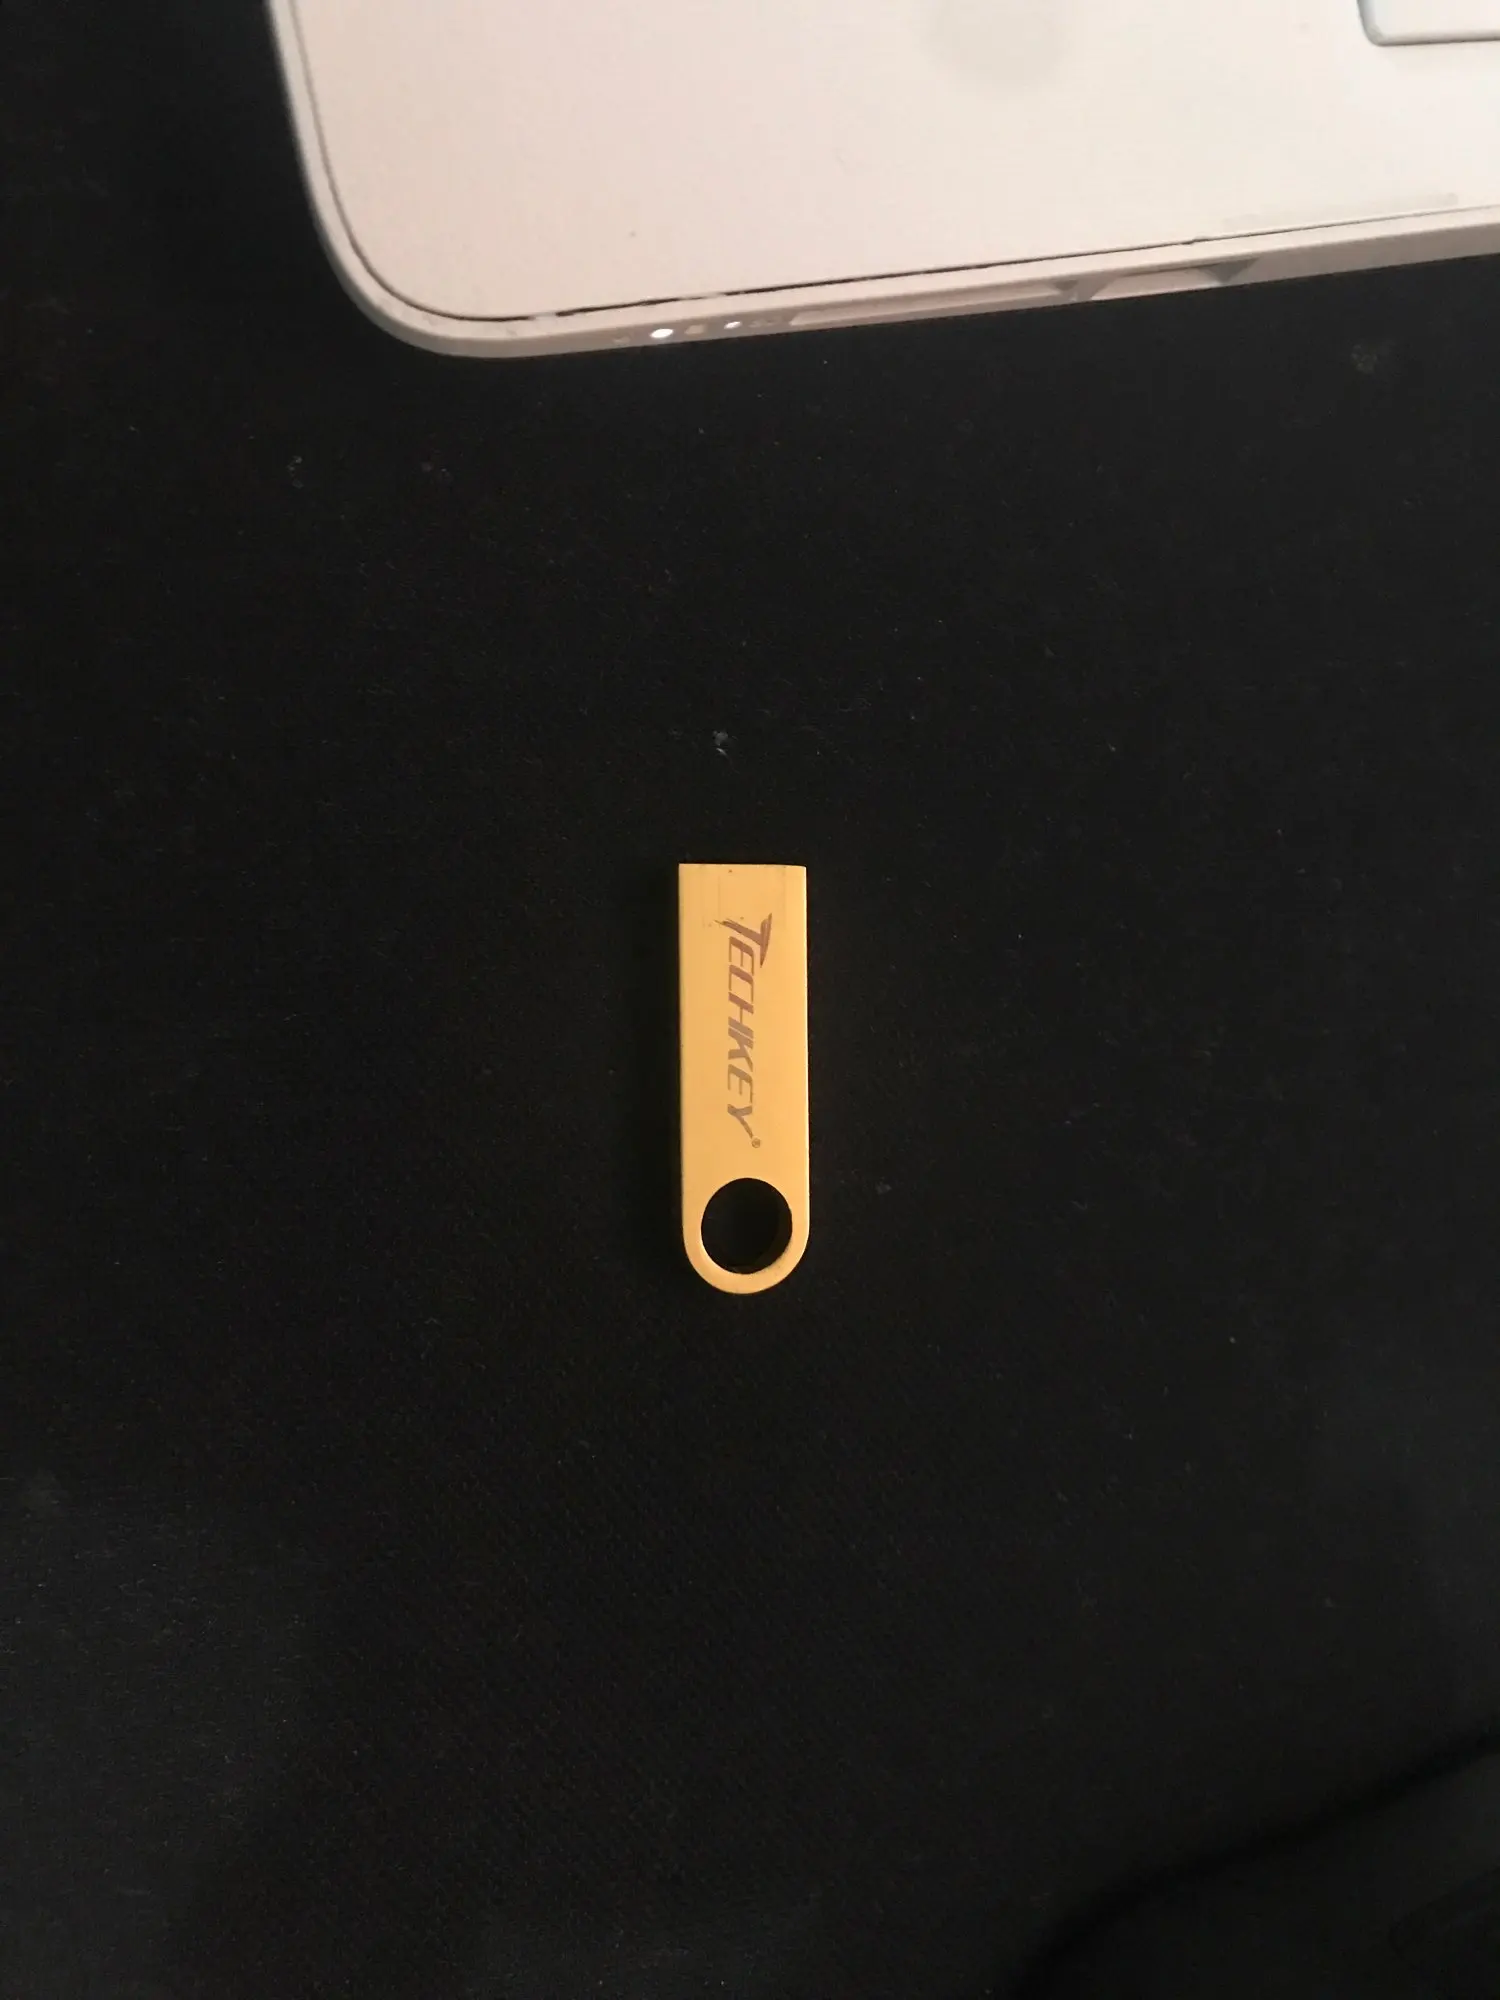 Mini Metal USB Flash Drive photo review